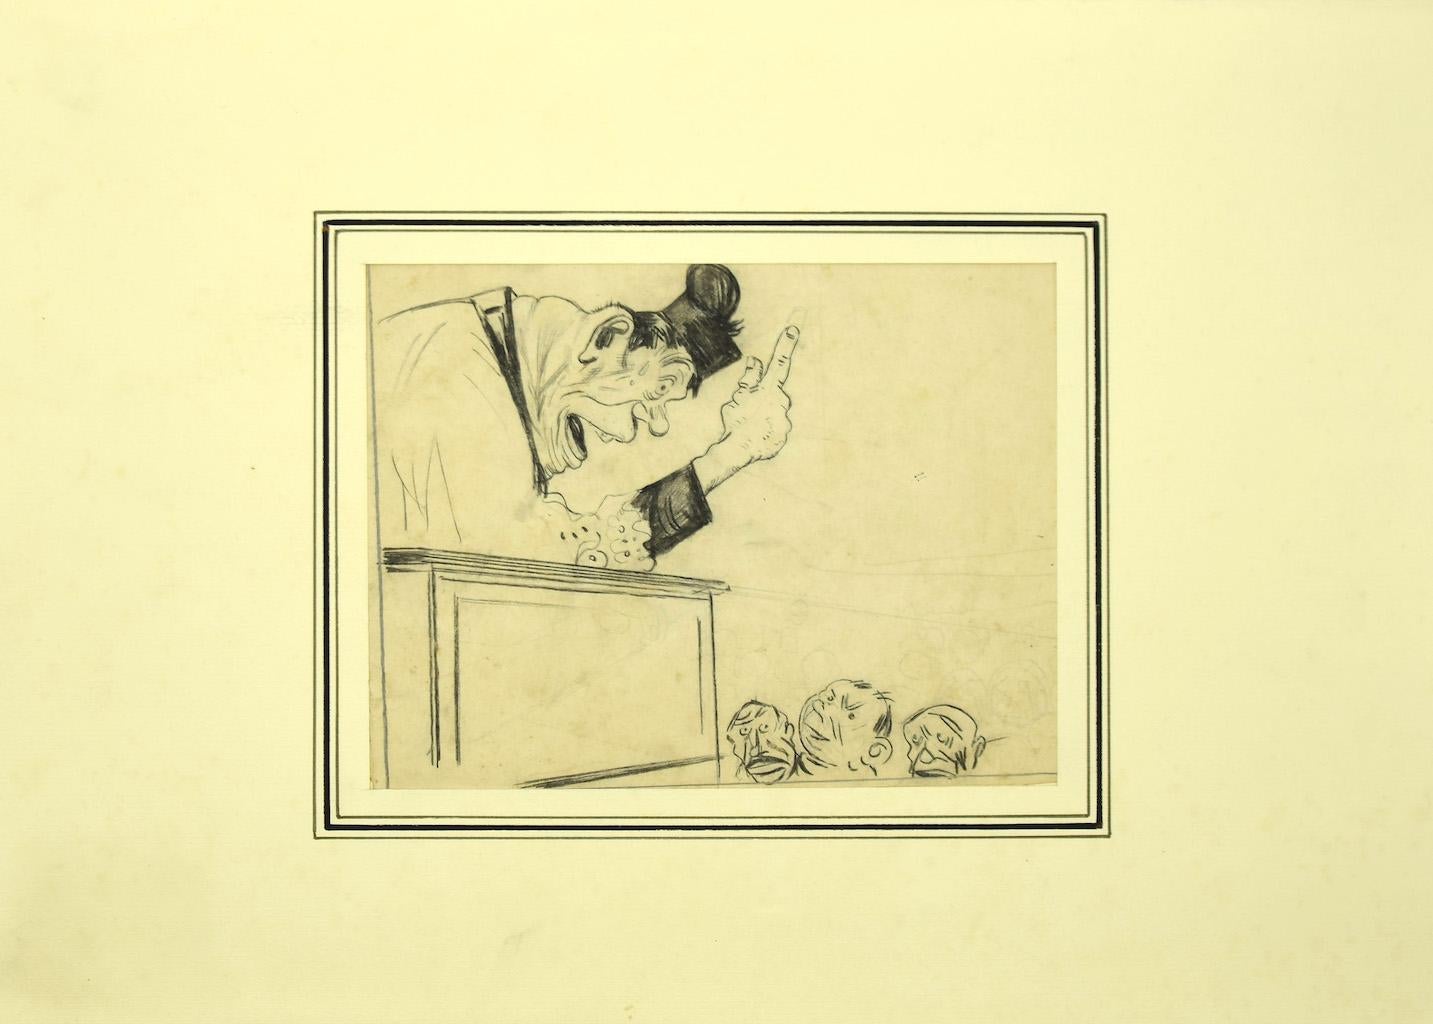 Preach - Original Pen, Ink and Pencil on Paper by G. Galantara - 1908 ca. - Art by Gabriele Galantara